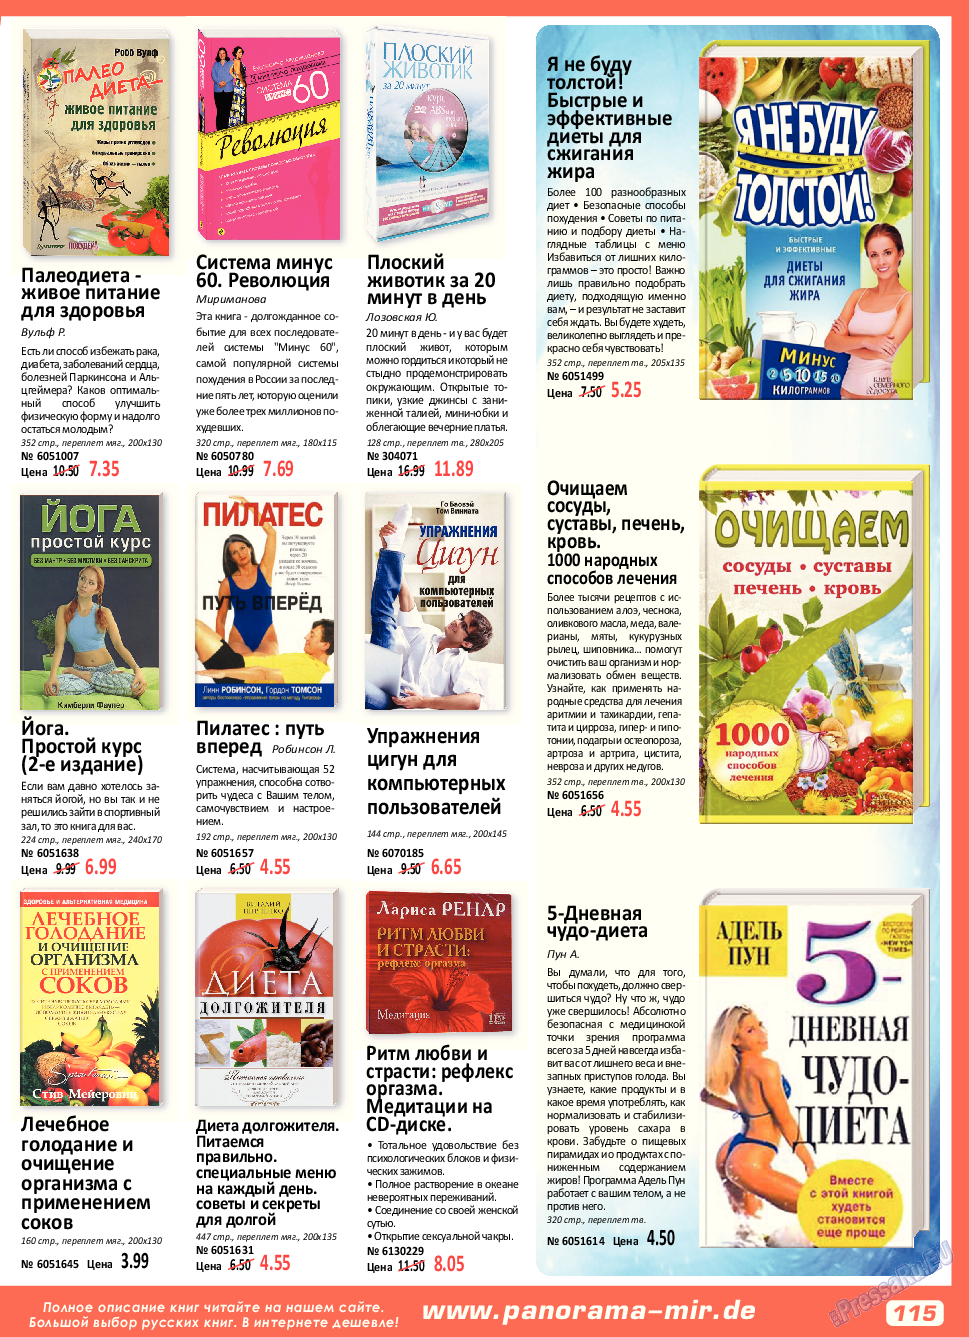 Panorama-mir, журнал. 2017 №7 стр.115